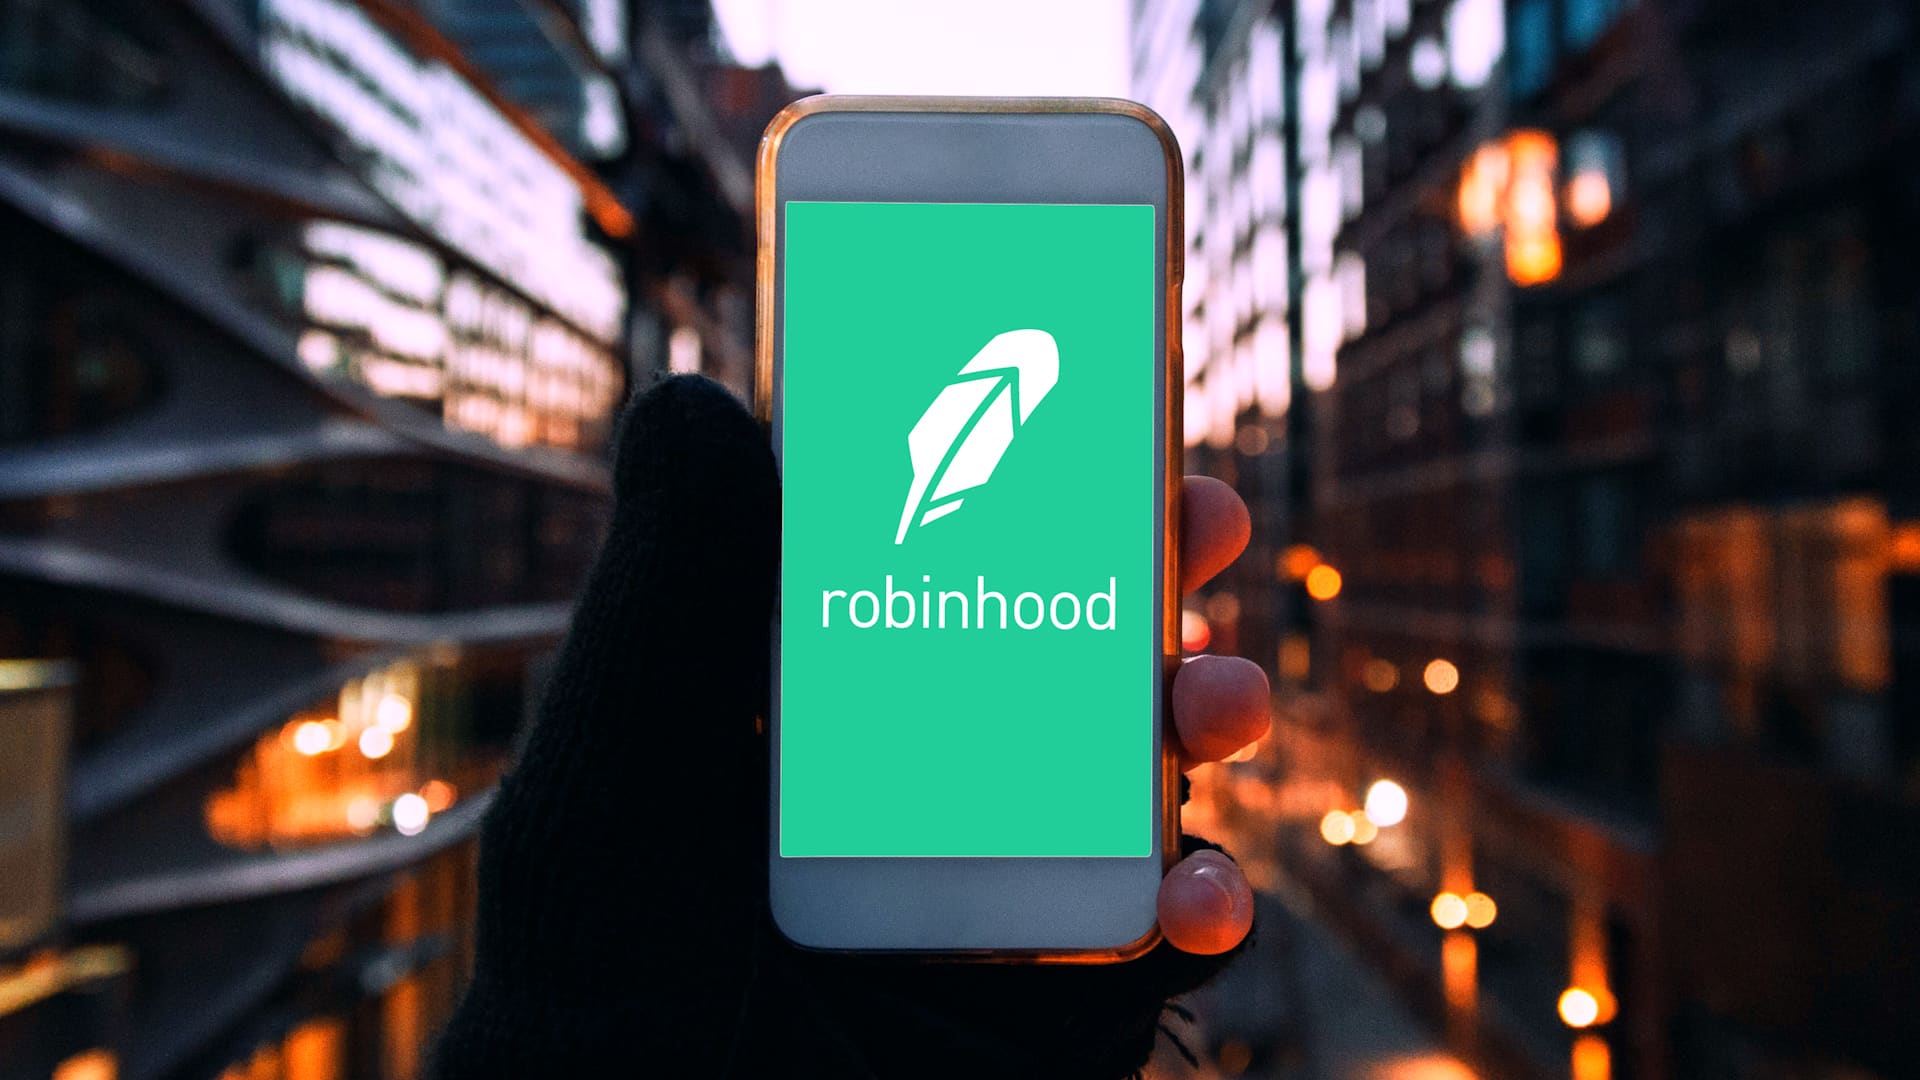 Robinhood lands a $7.6 billion valuation after recent funding round